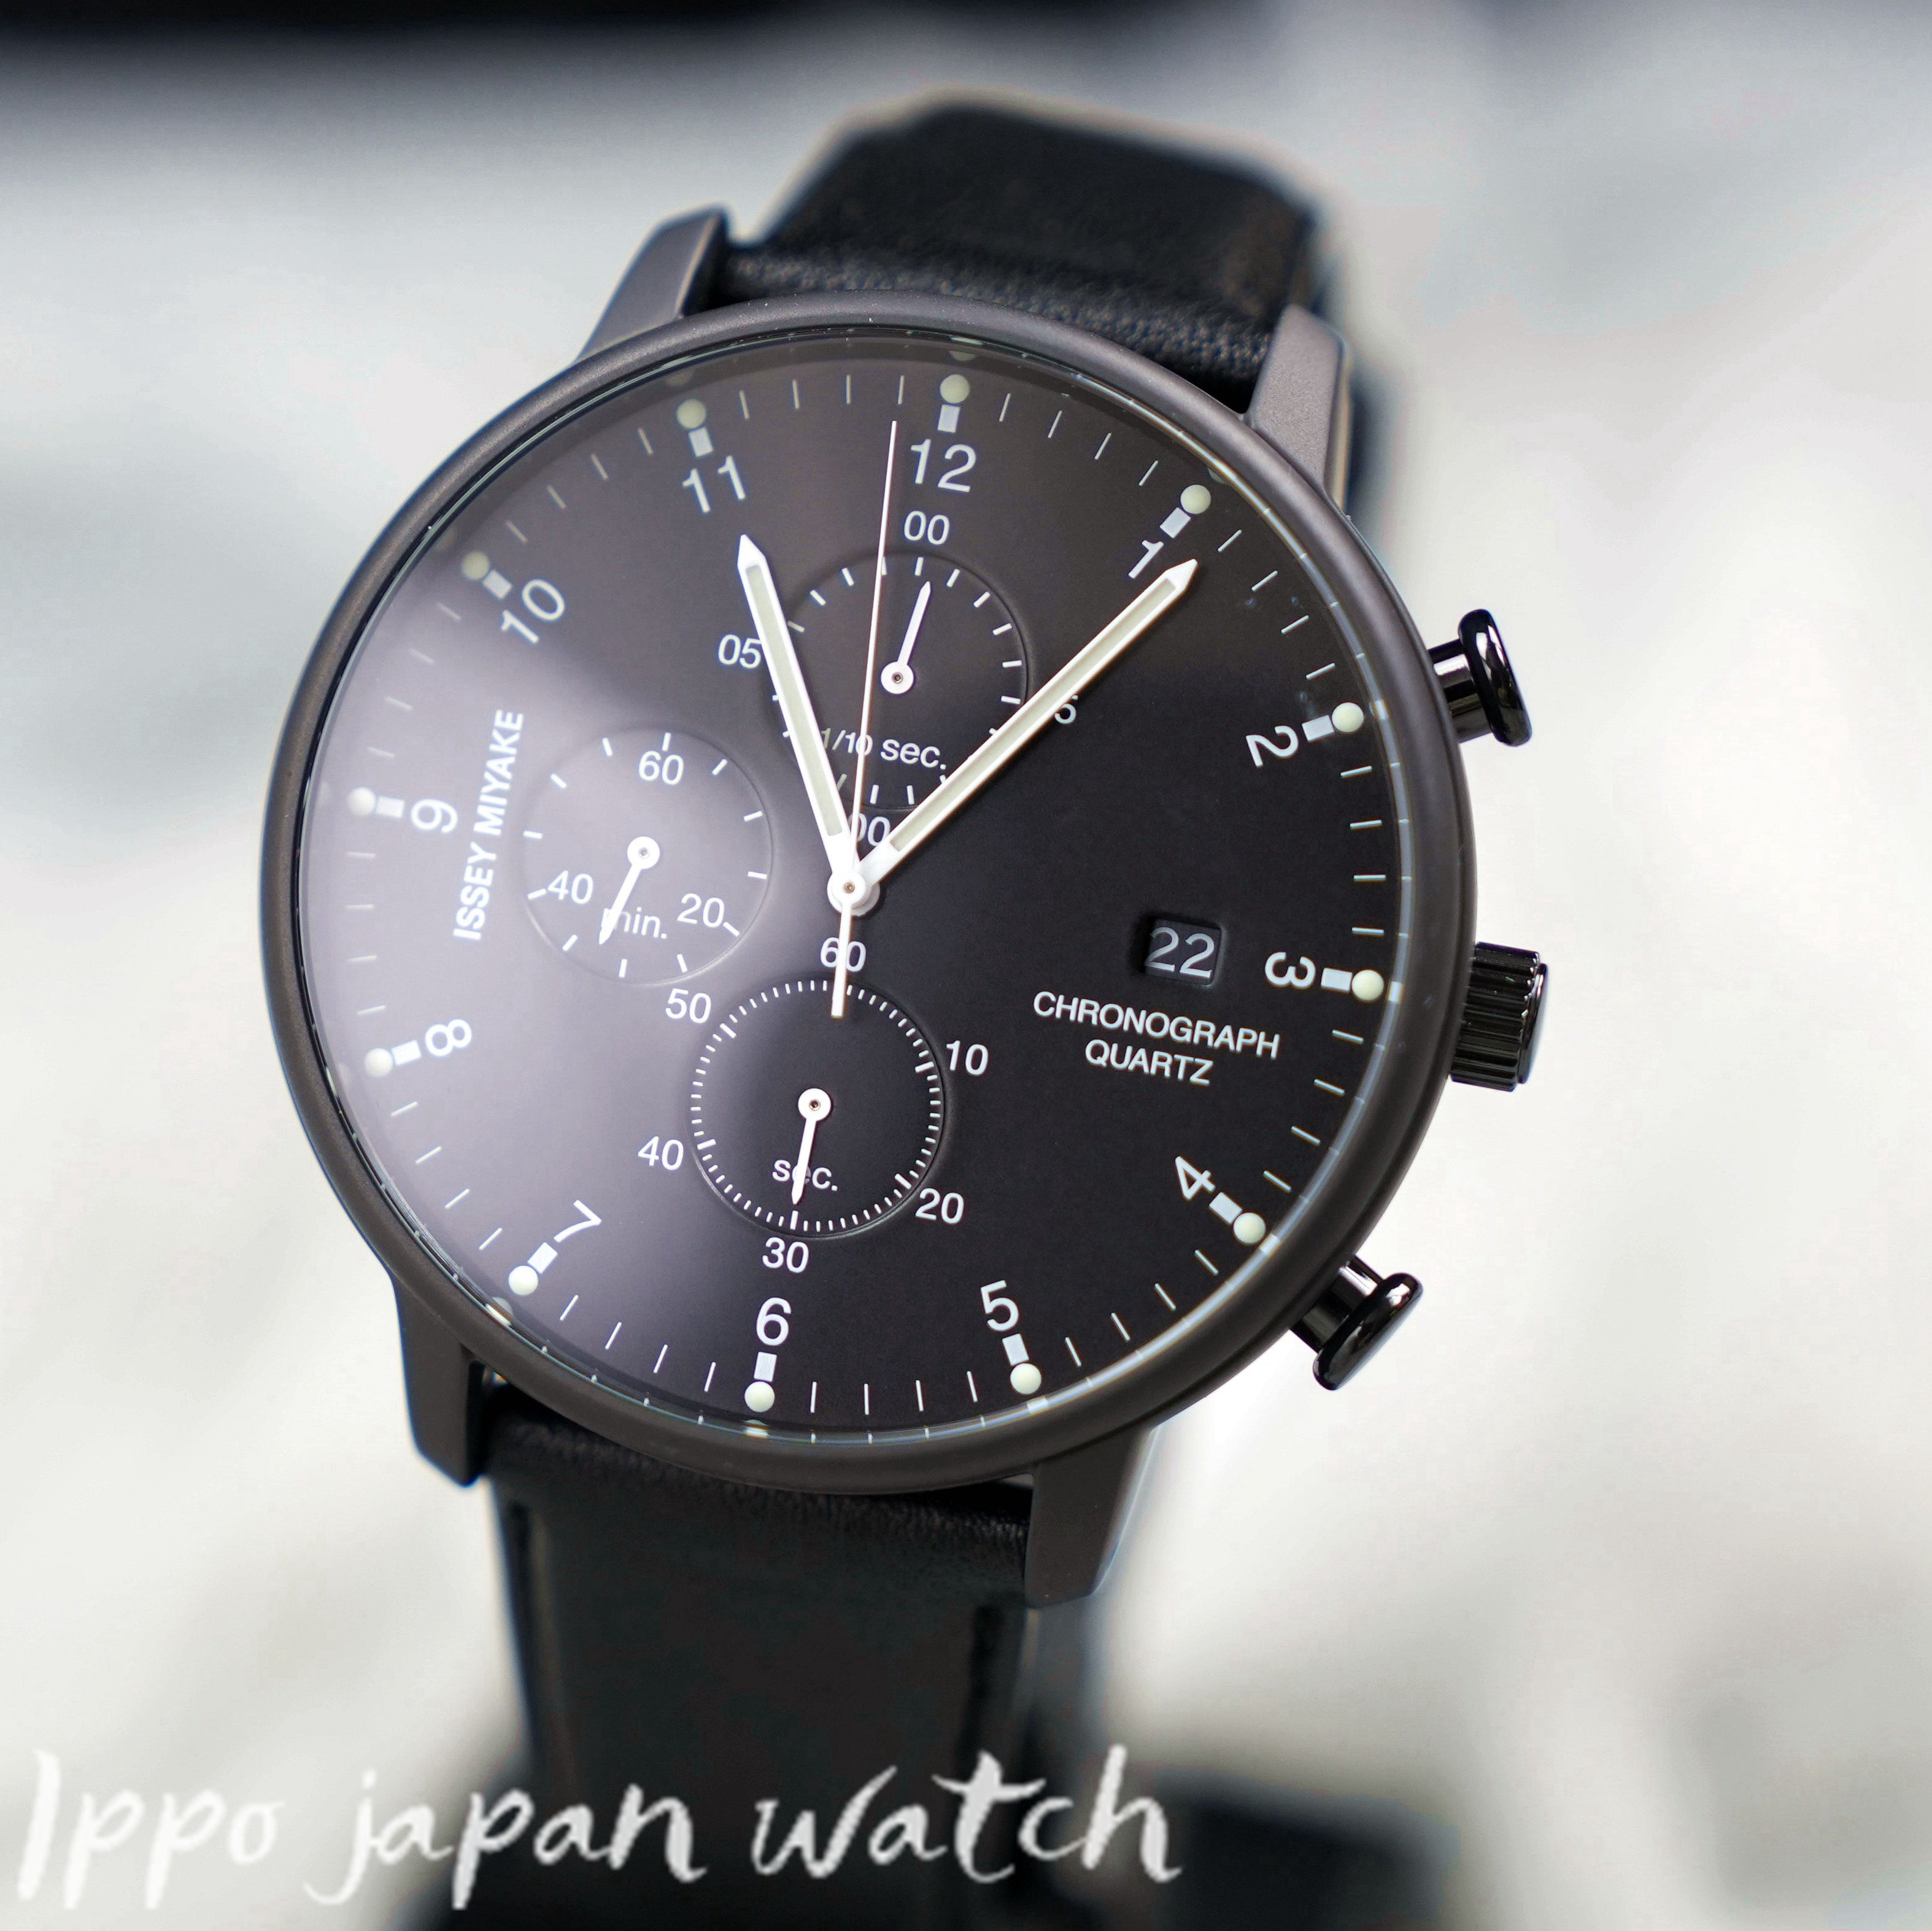 ISSEY MIYAKE C NYAD007 men's watch manufactured by Seiko - IPPO JAPAN WATCH 